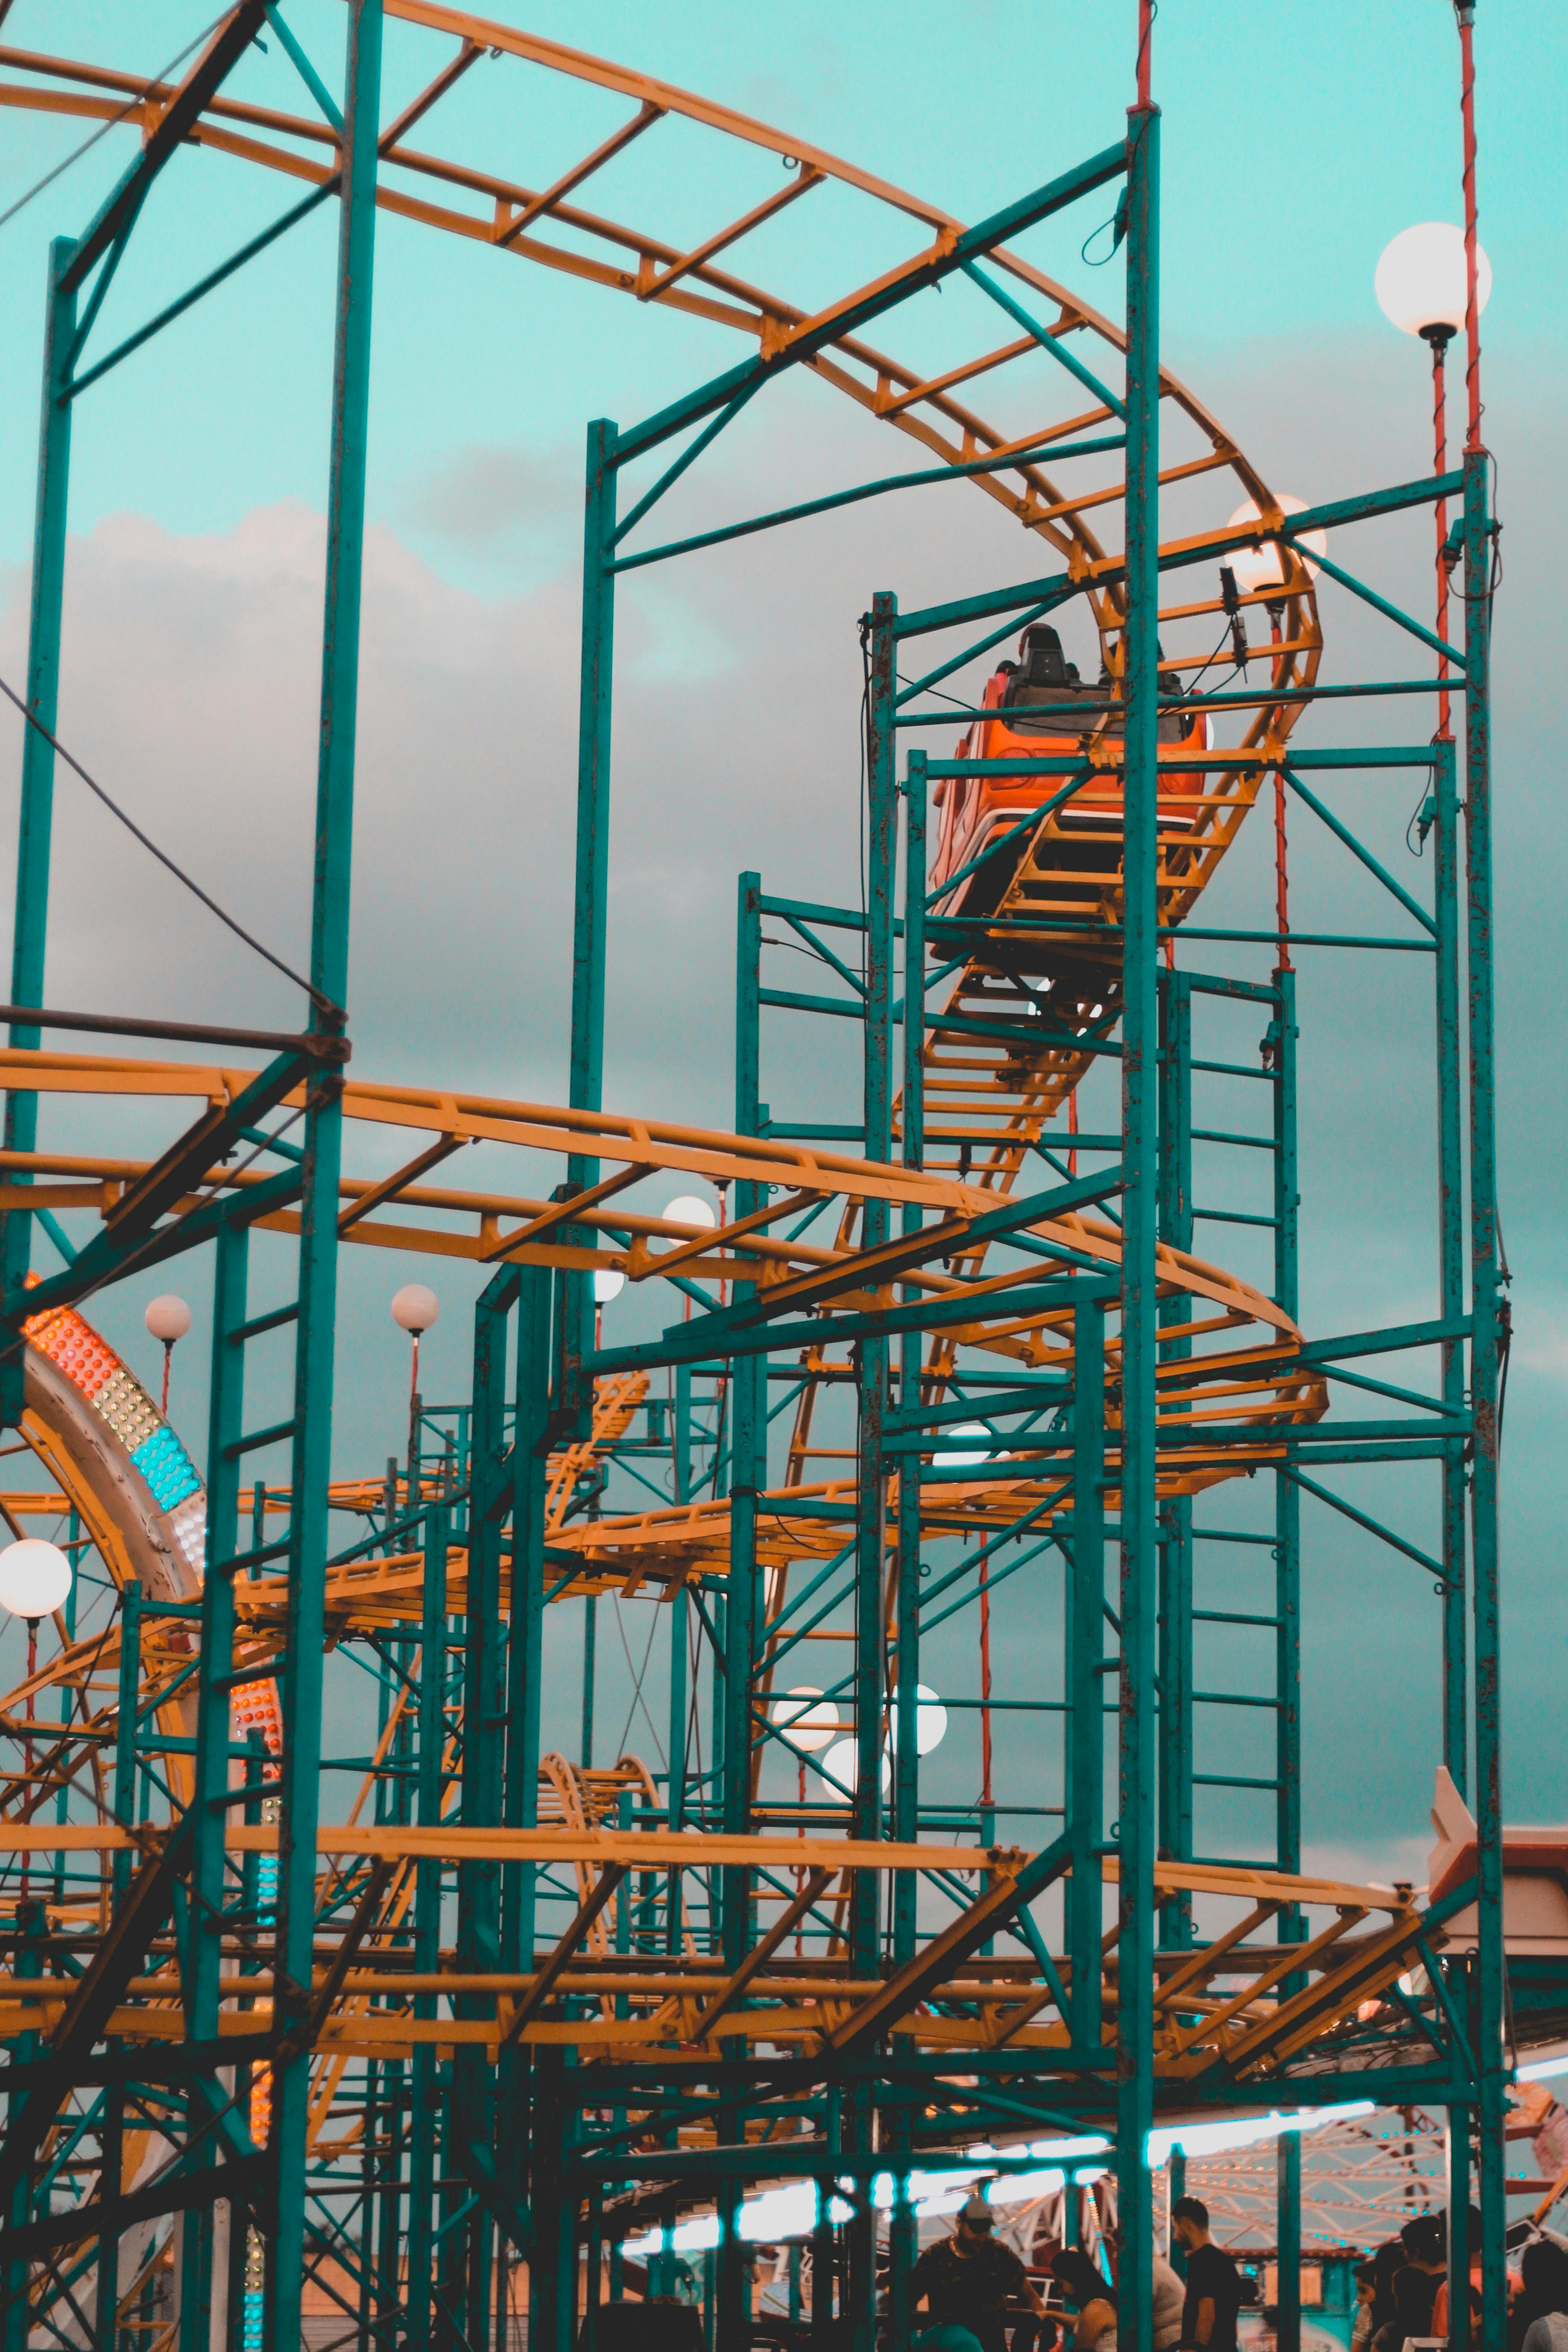 Huge roller coaster | Source: Pexels